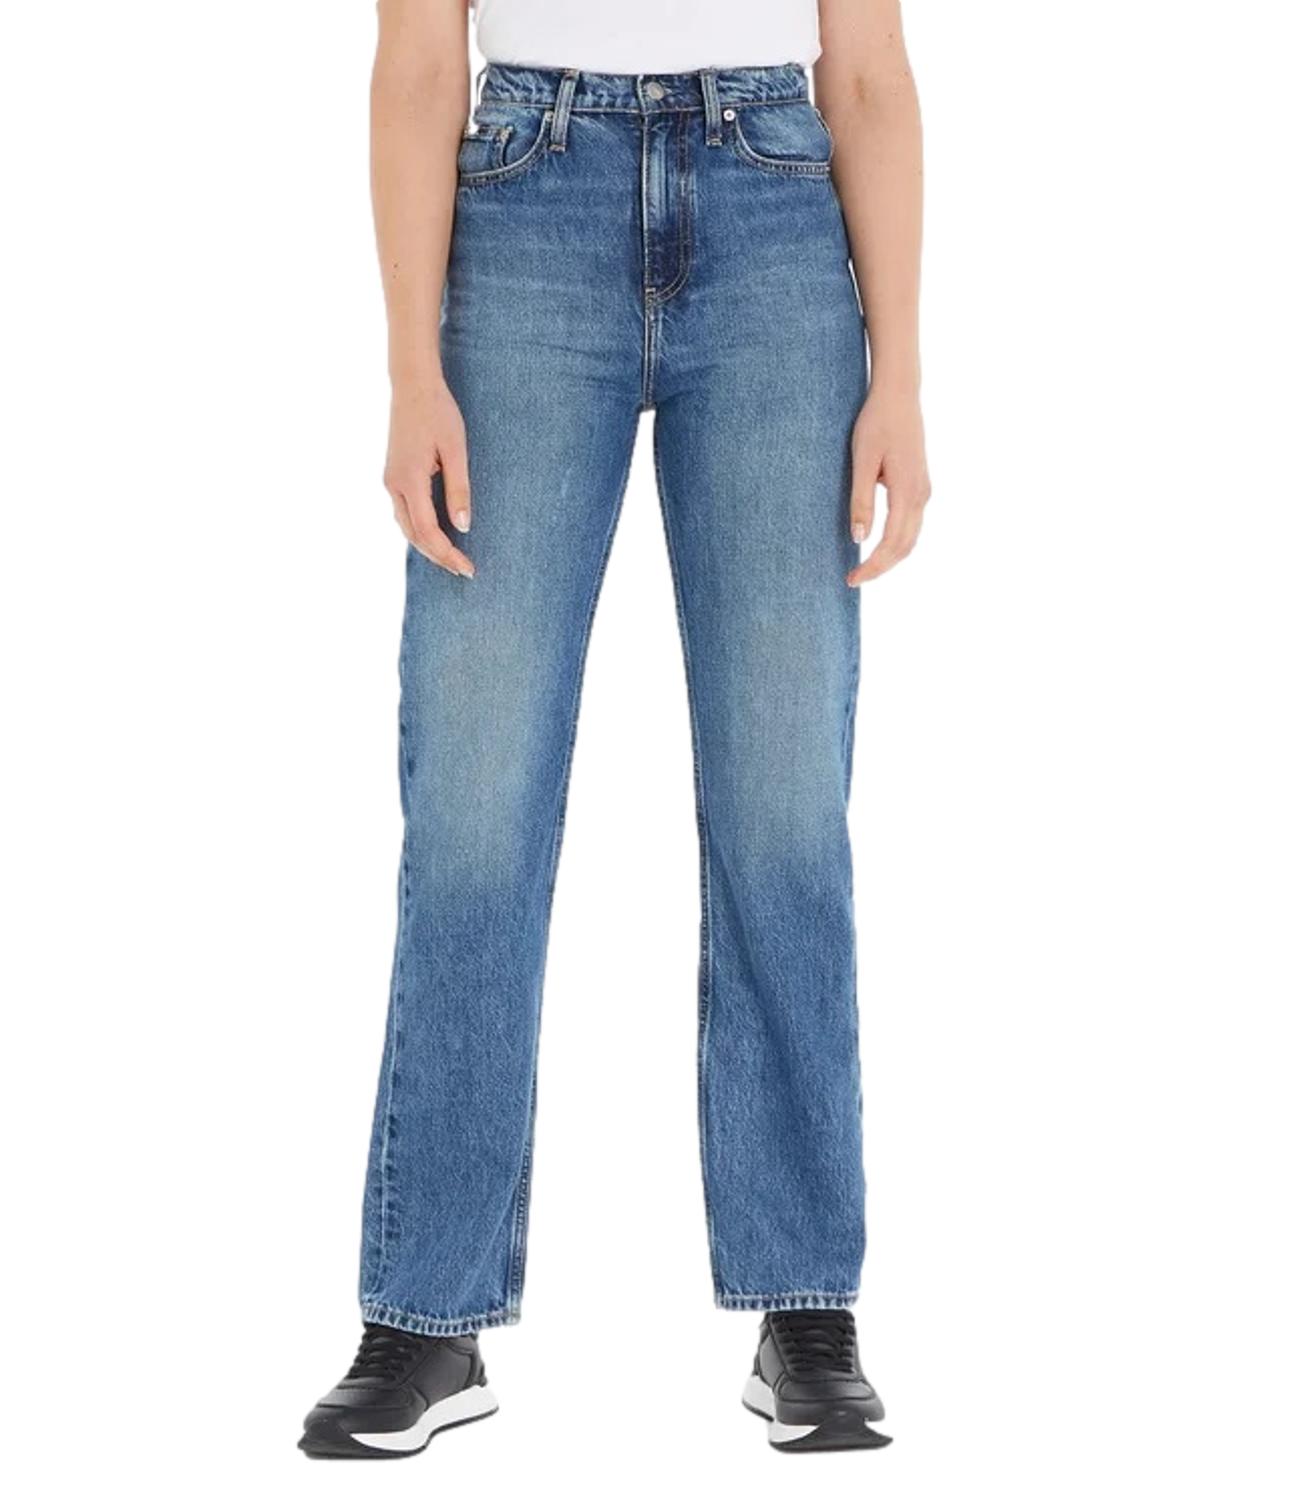 Jeans regular fit denim chiaro con logo ck bianco sul retro